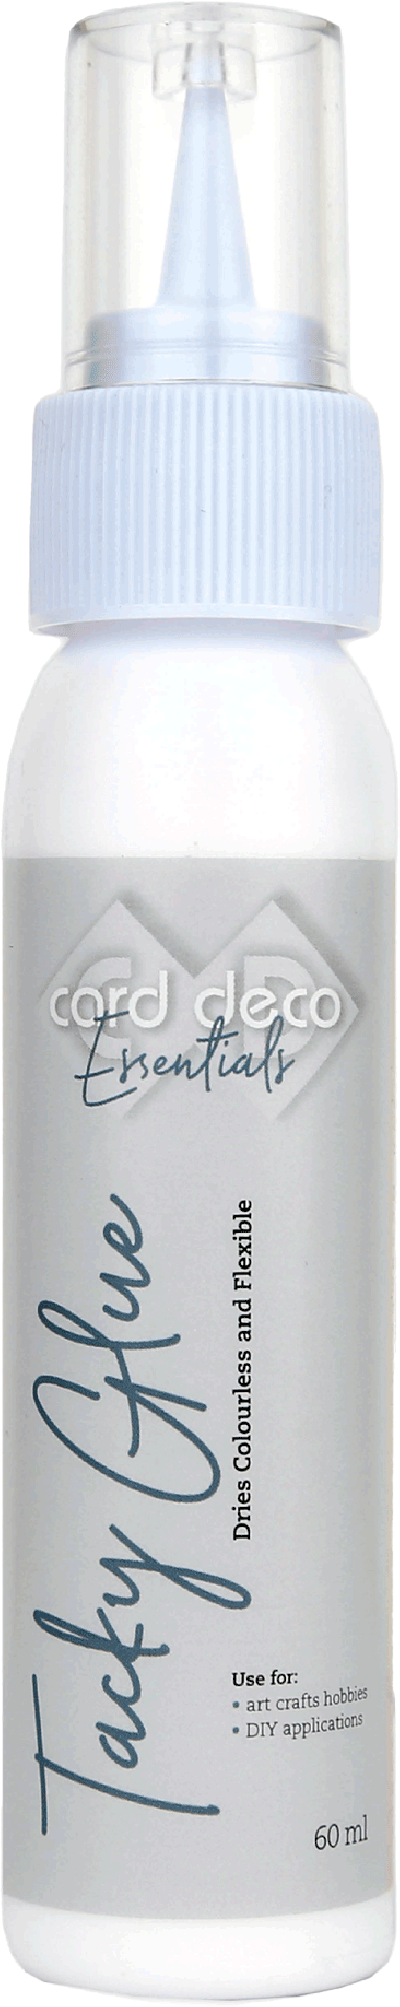 Tacky glue 60ml Card Deco Essentials